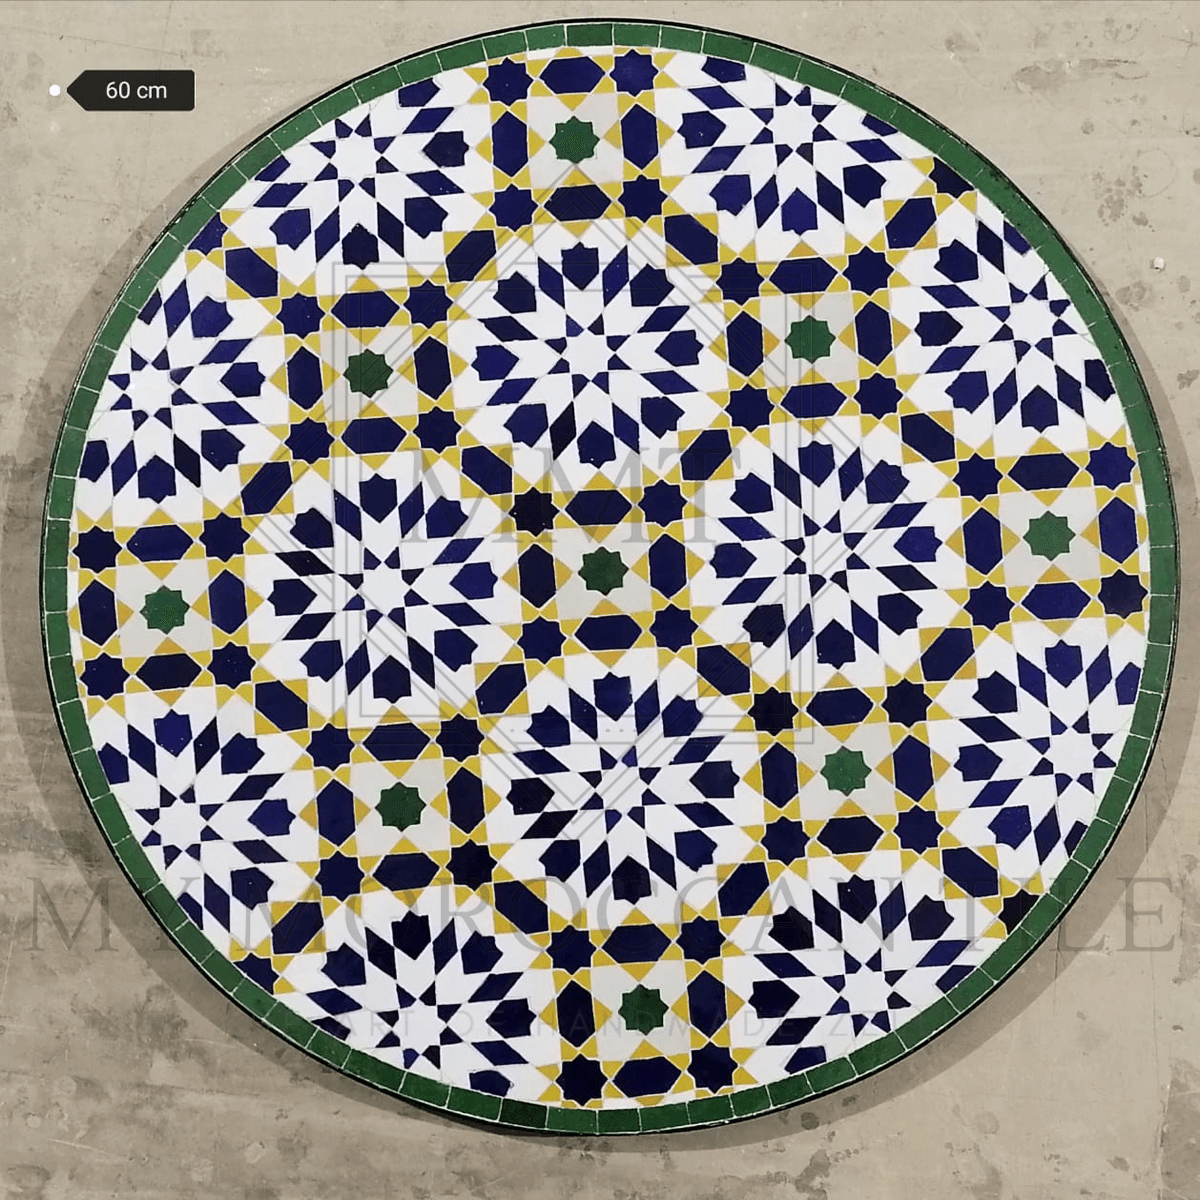 Handmade Moroccan Mosaic Table 2108-05